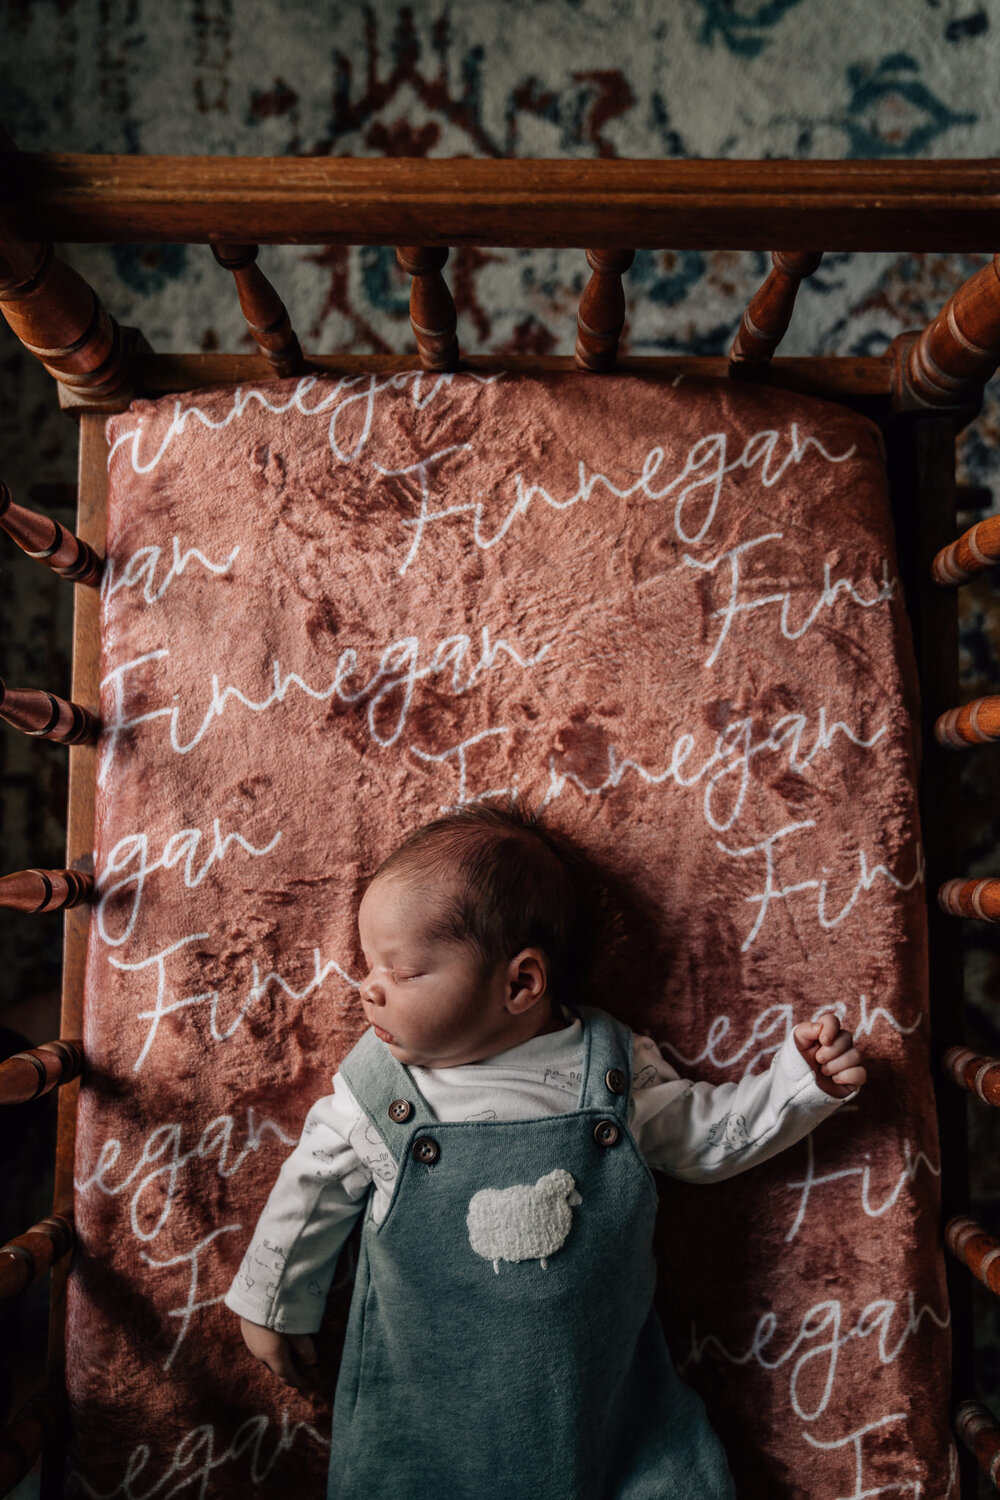 Dana-Jacobs-Photography-Finnegan-newborn-photography-session-st-louis-Web-no-watermark44-1613.JPG